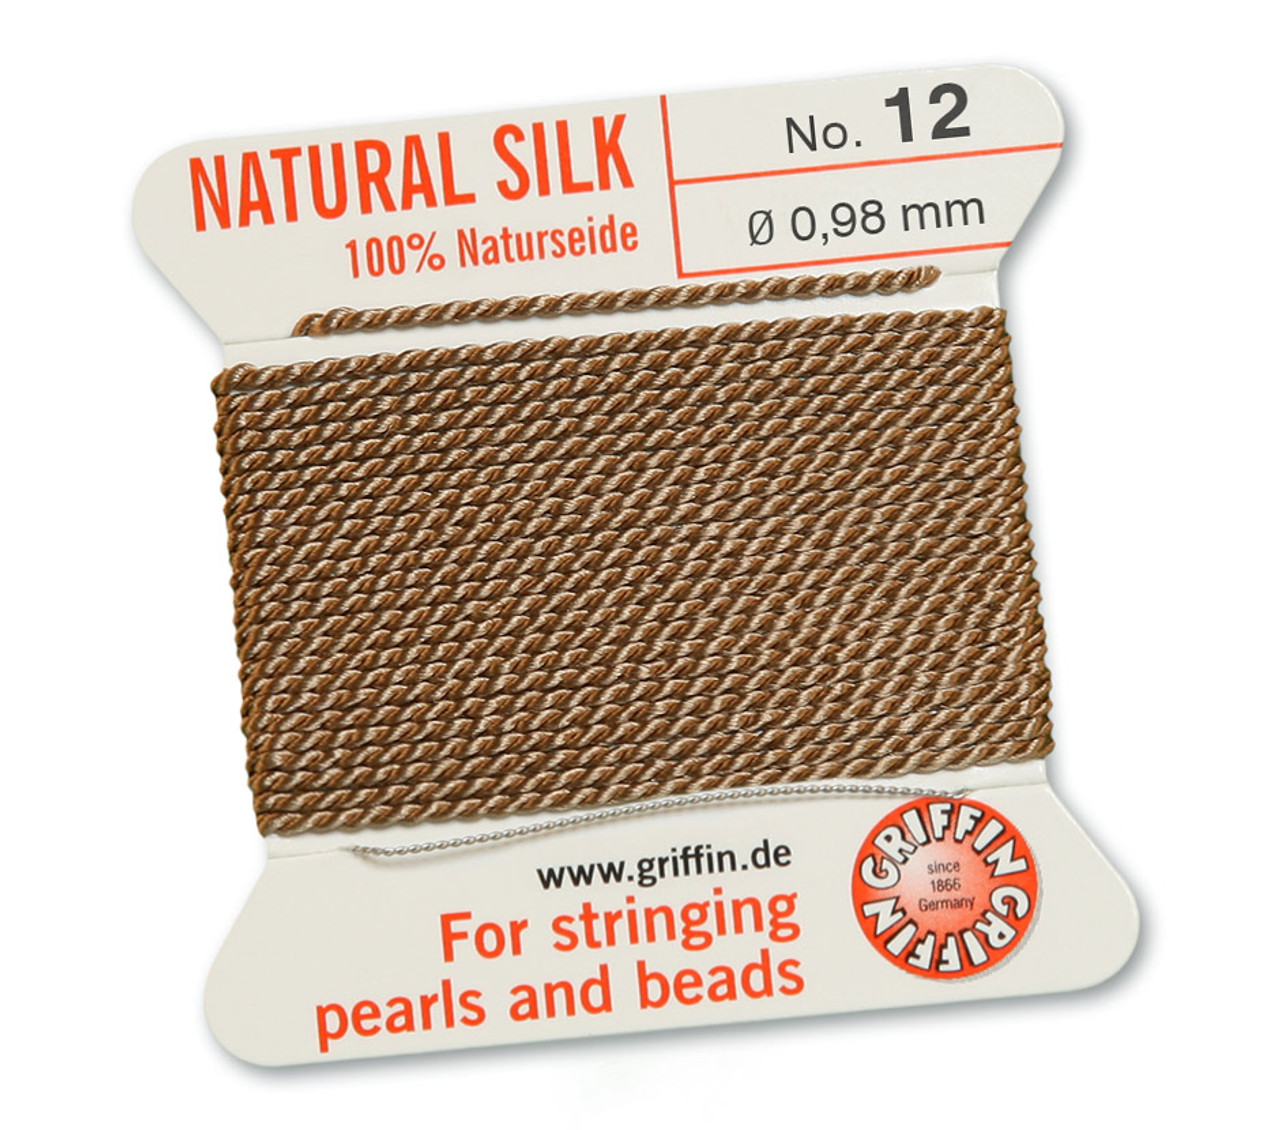 Griffin Natural Silk Bead Cord No.12 CORNELIAN